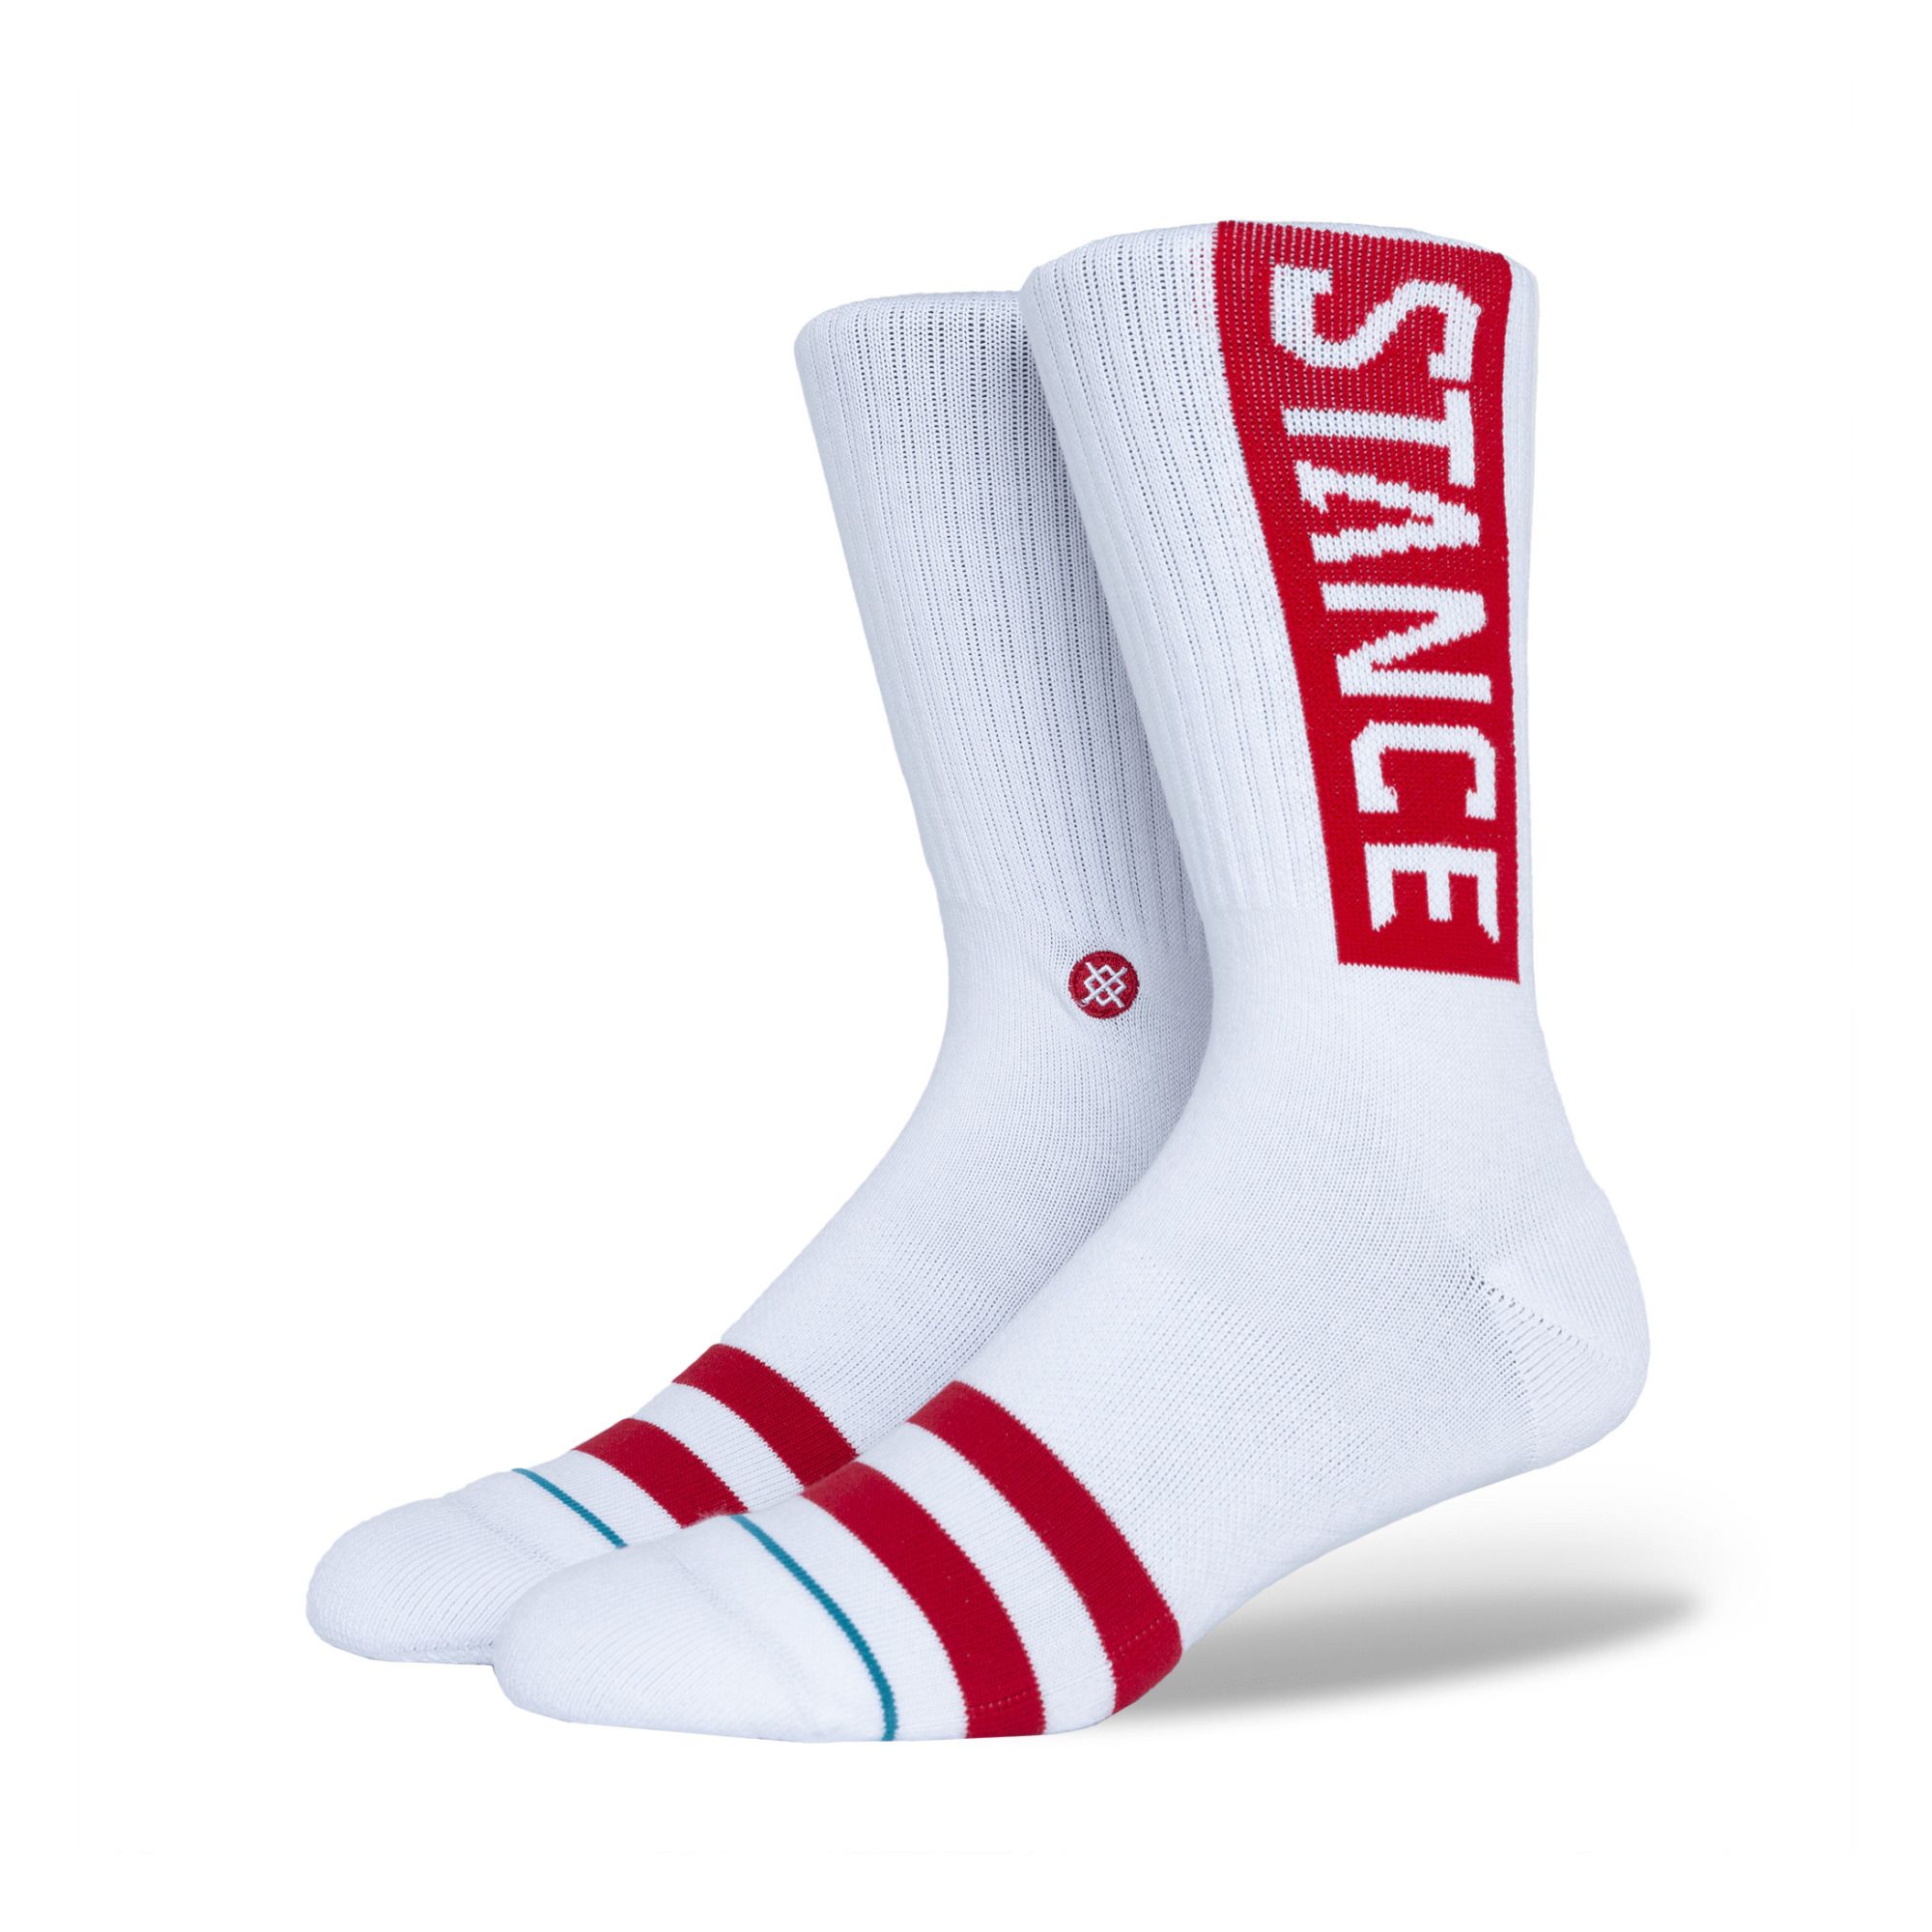 Stance Socks - Chaussettes OG - Homme - Rouge